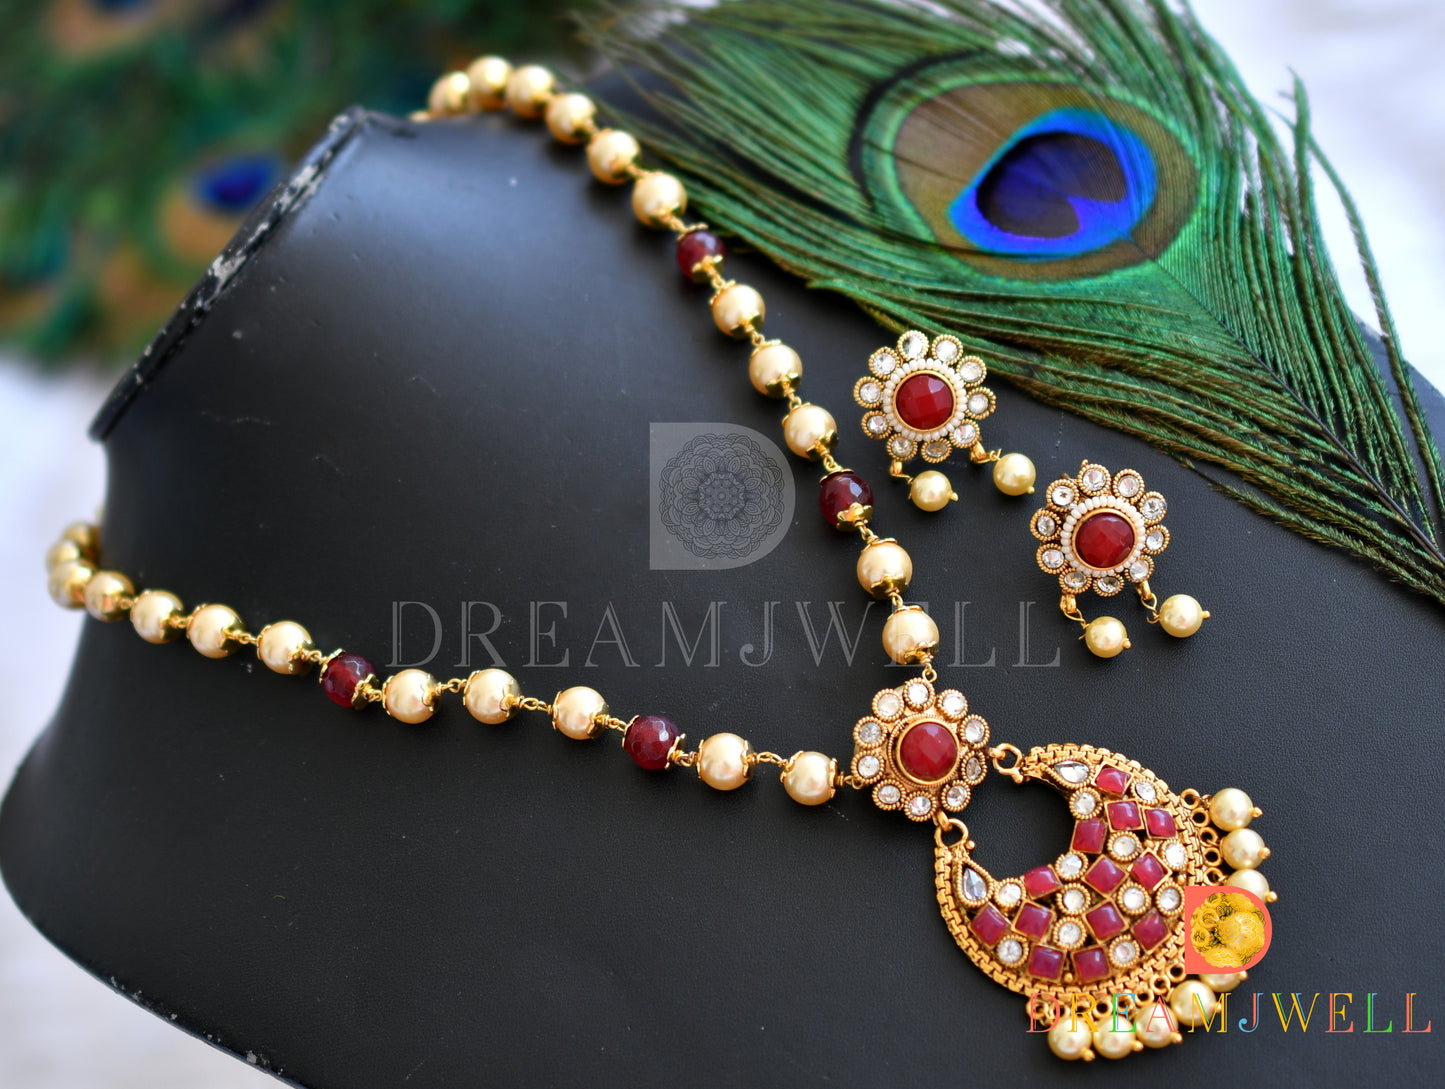 Antique pearl- pink necklace set dj-01625